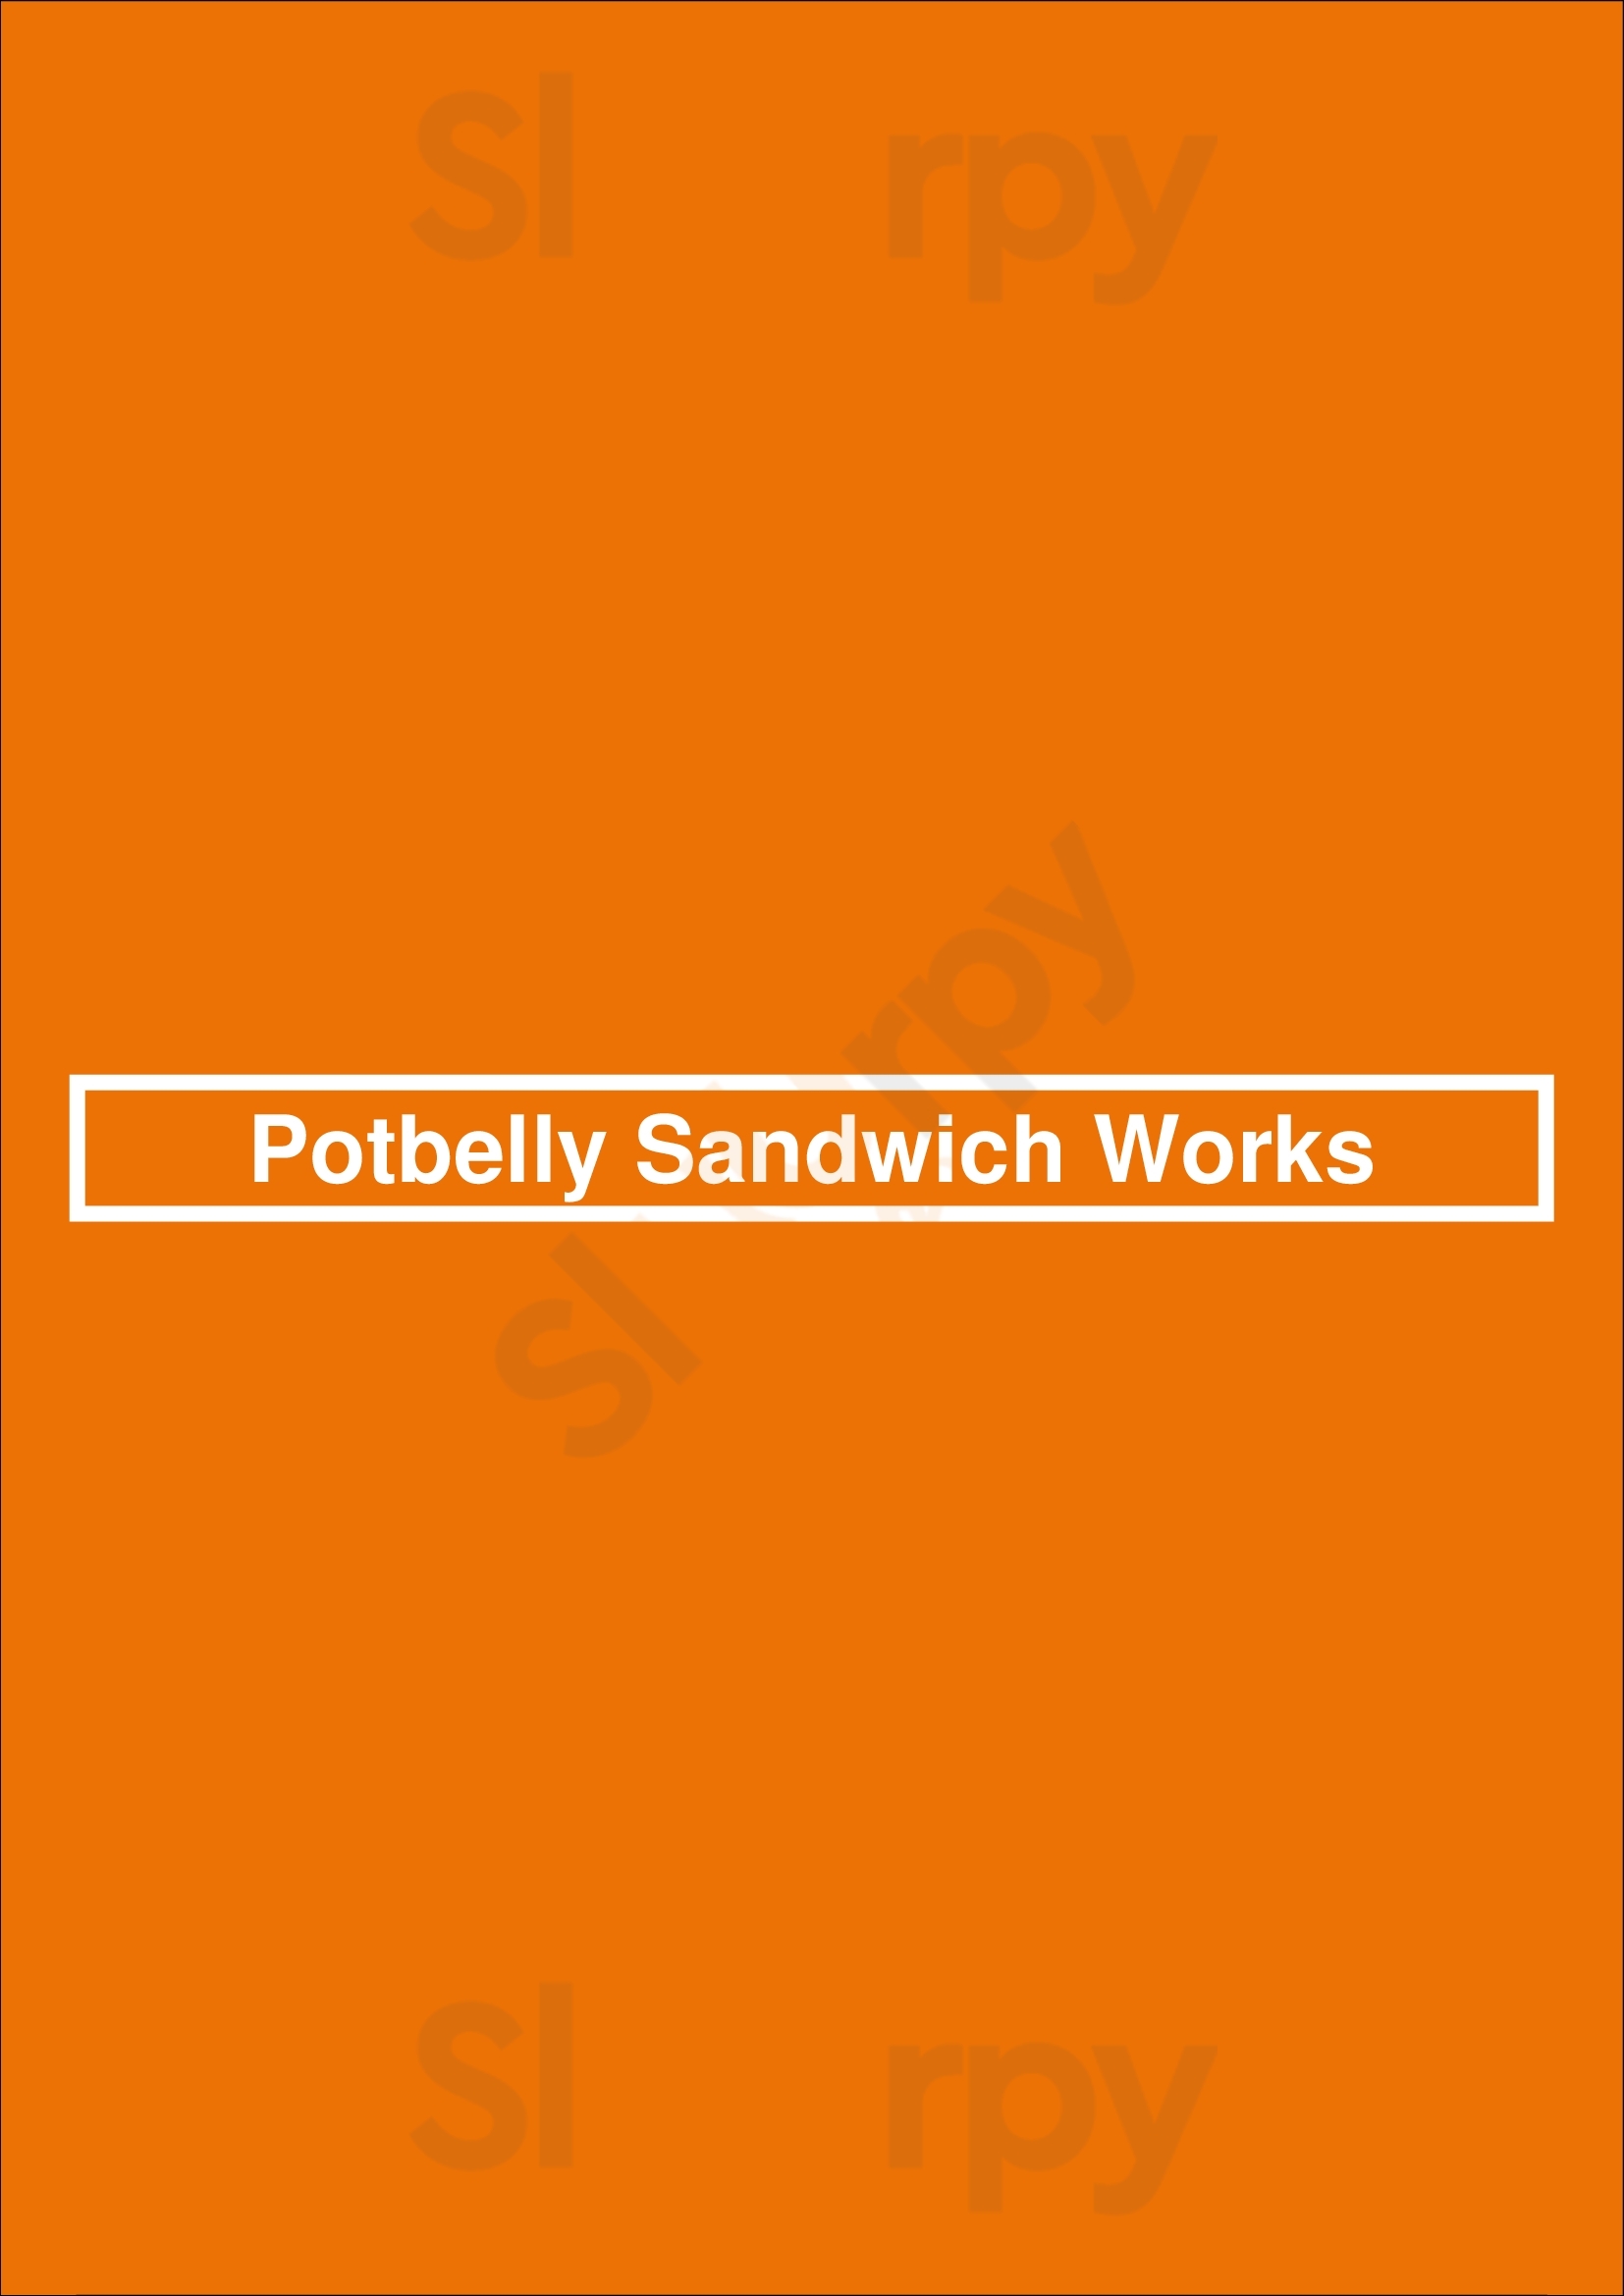 Potbelly Sandwich Shop Cincinnati Menu - 1